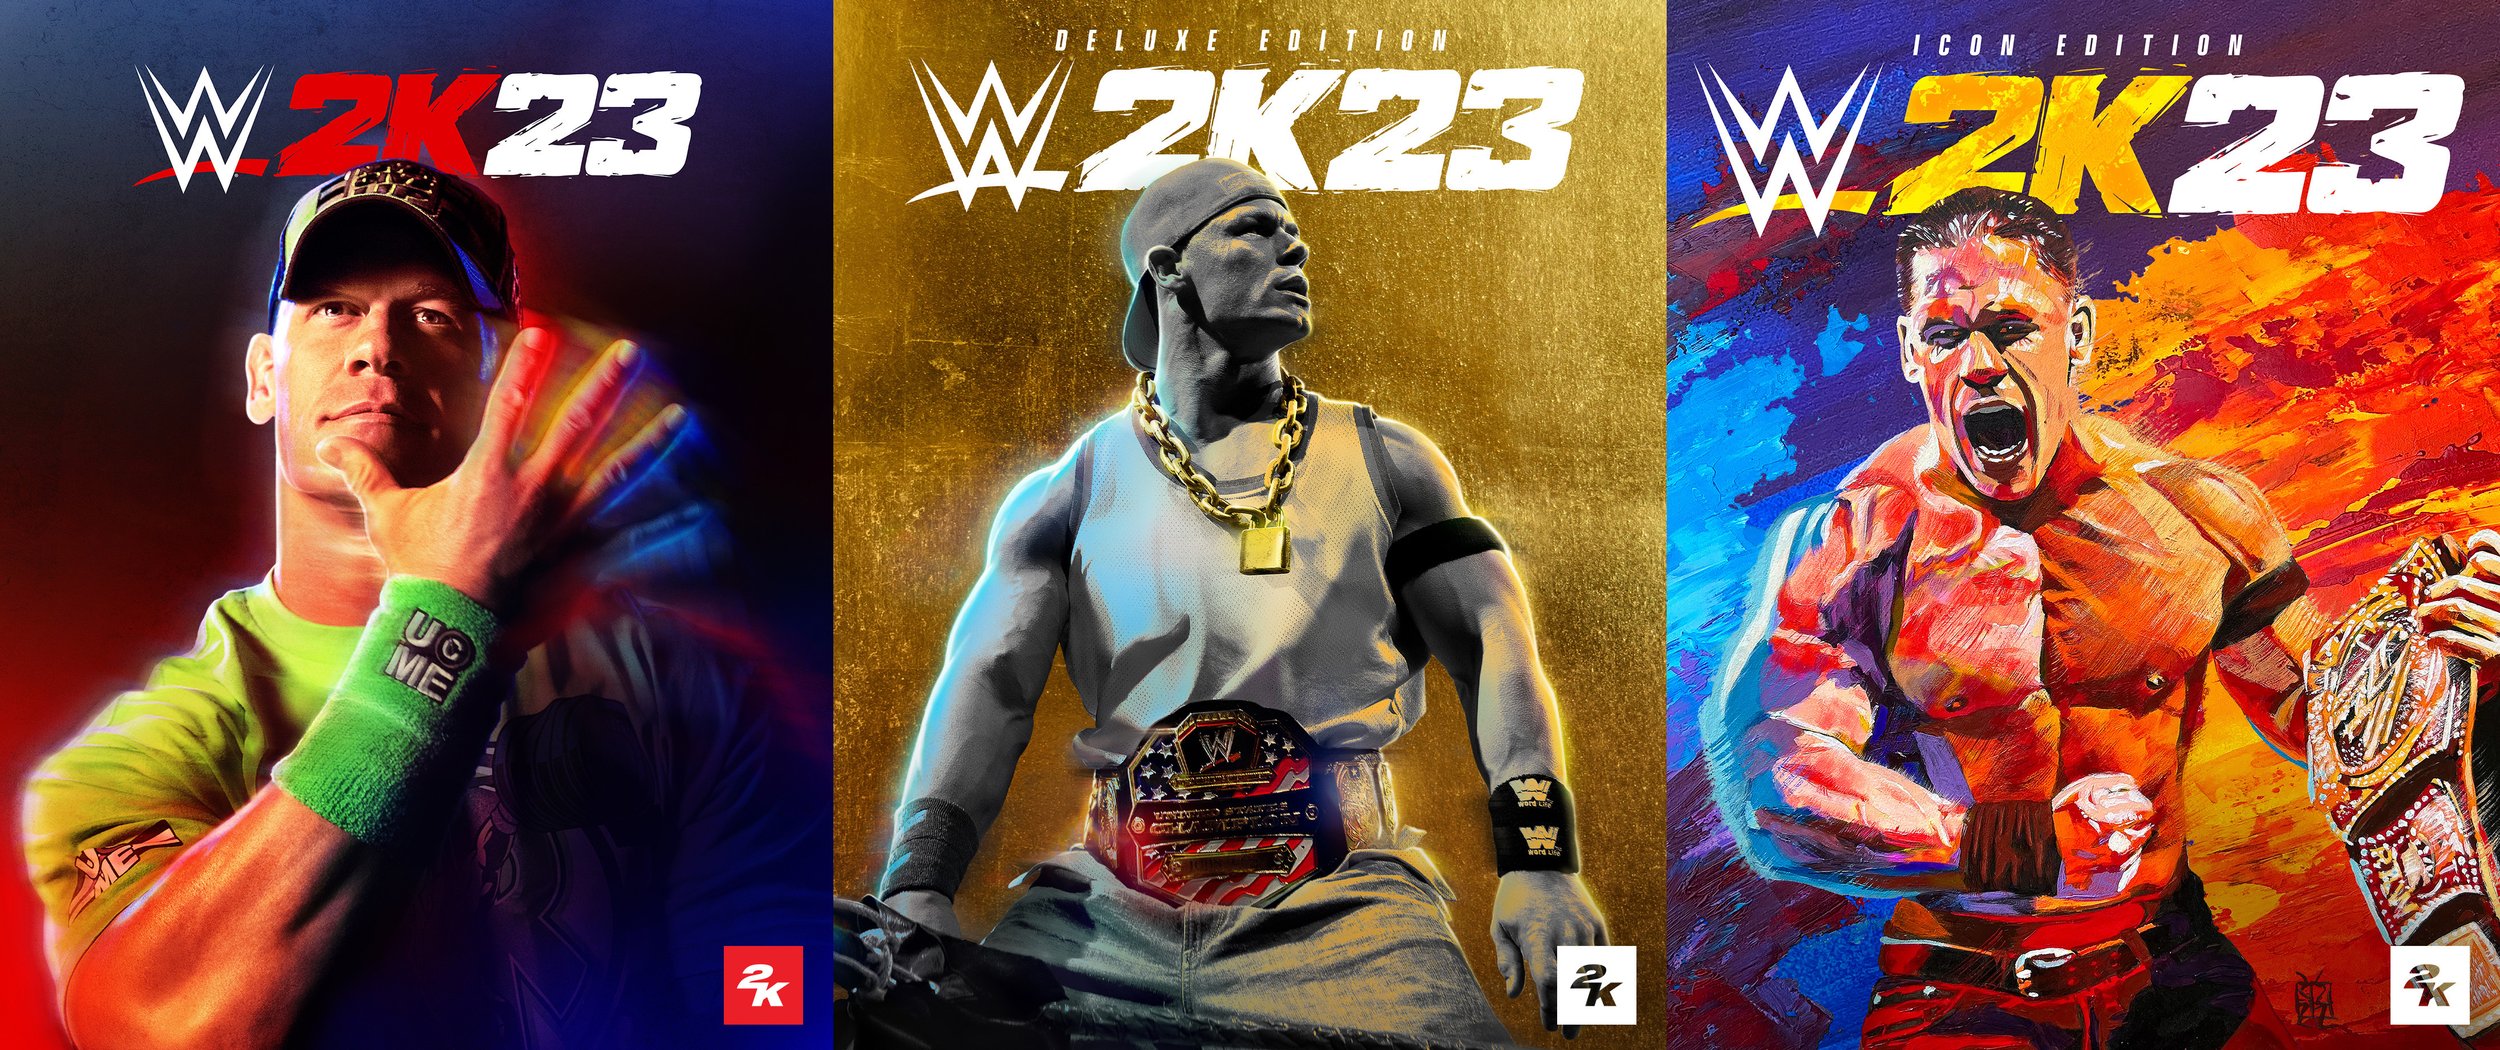 WWE 2K23 Cover Slate Key Art.jpg